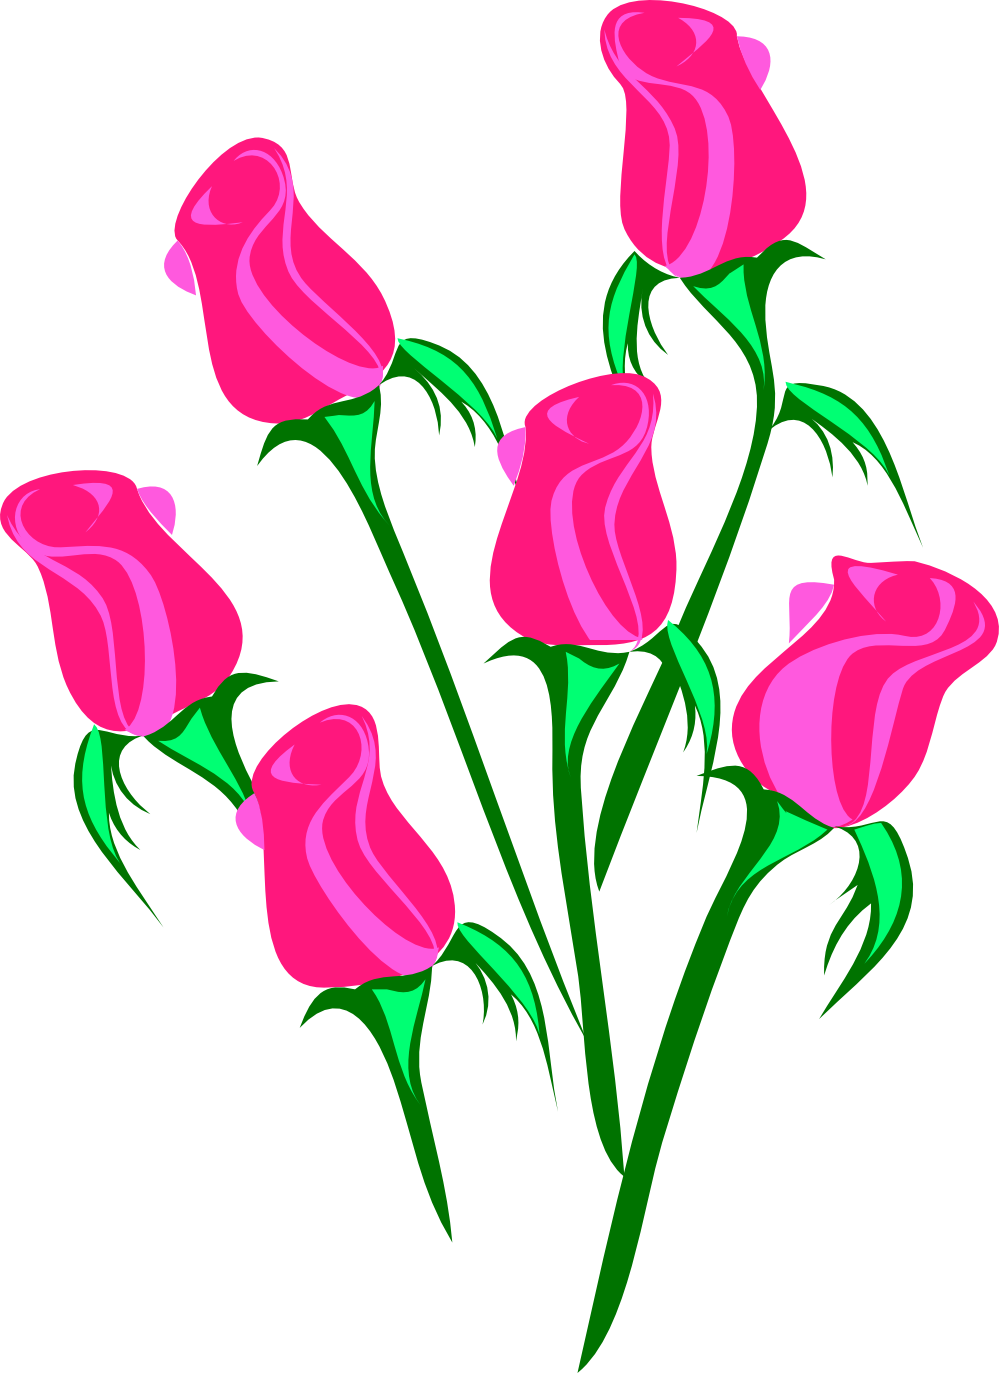 SVG Rose Unsor Flower xochi.info scallywag Flower Plant xochi.